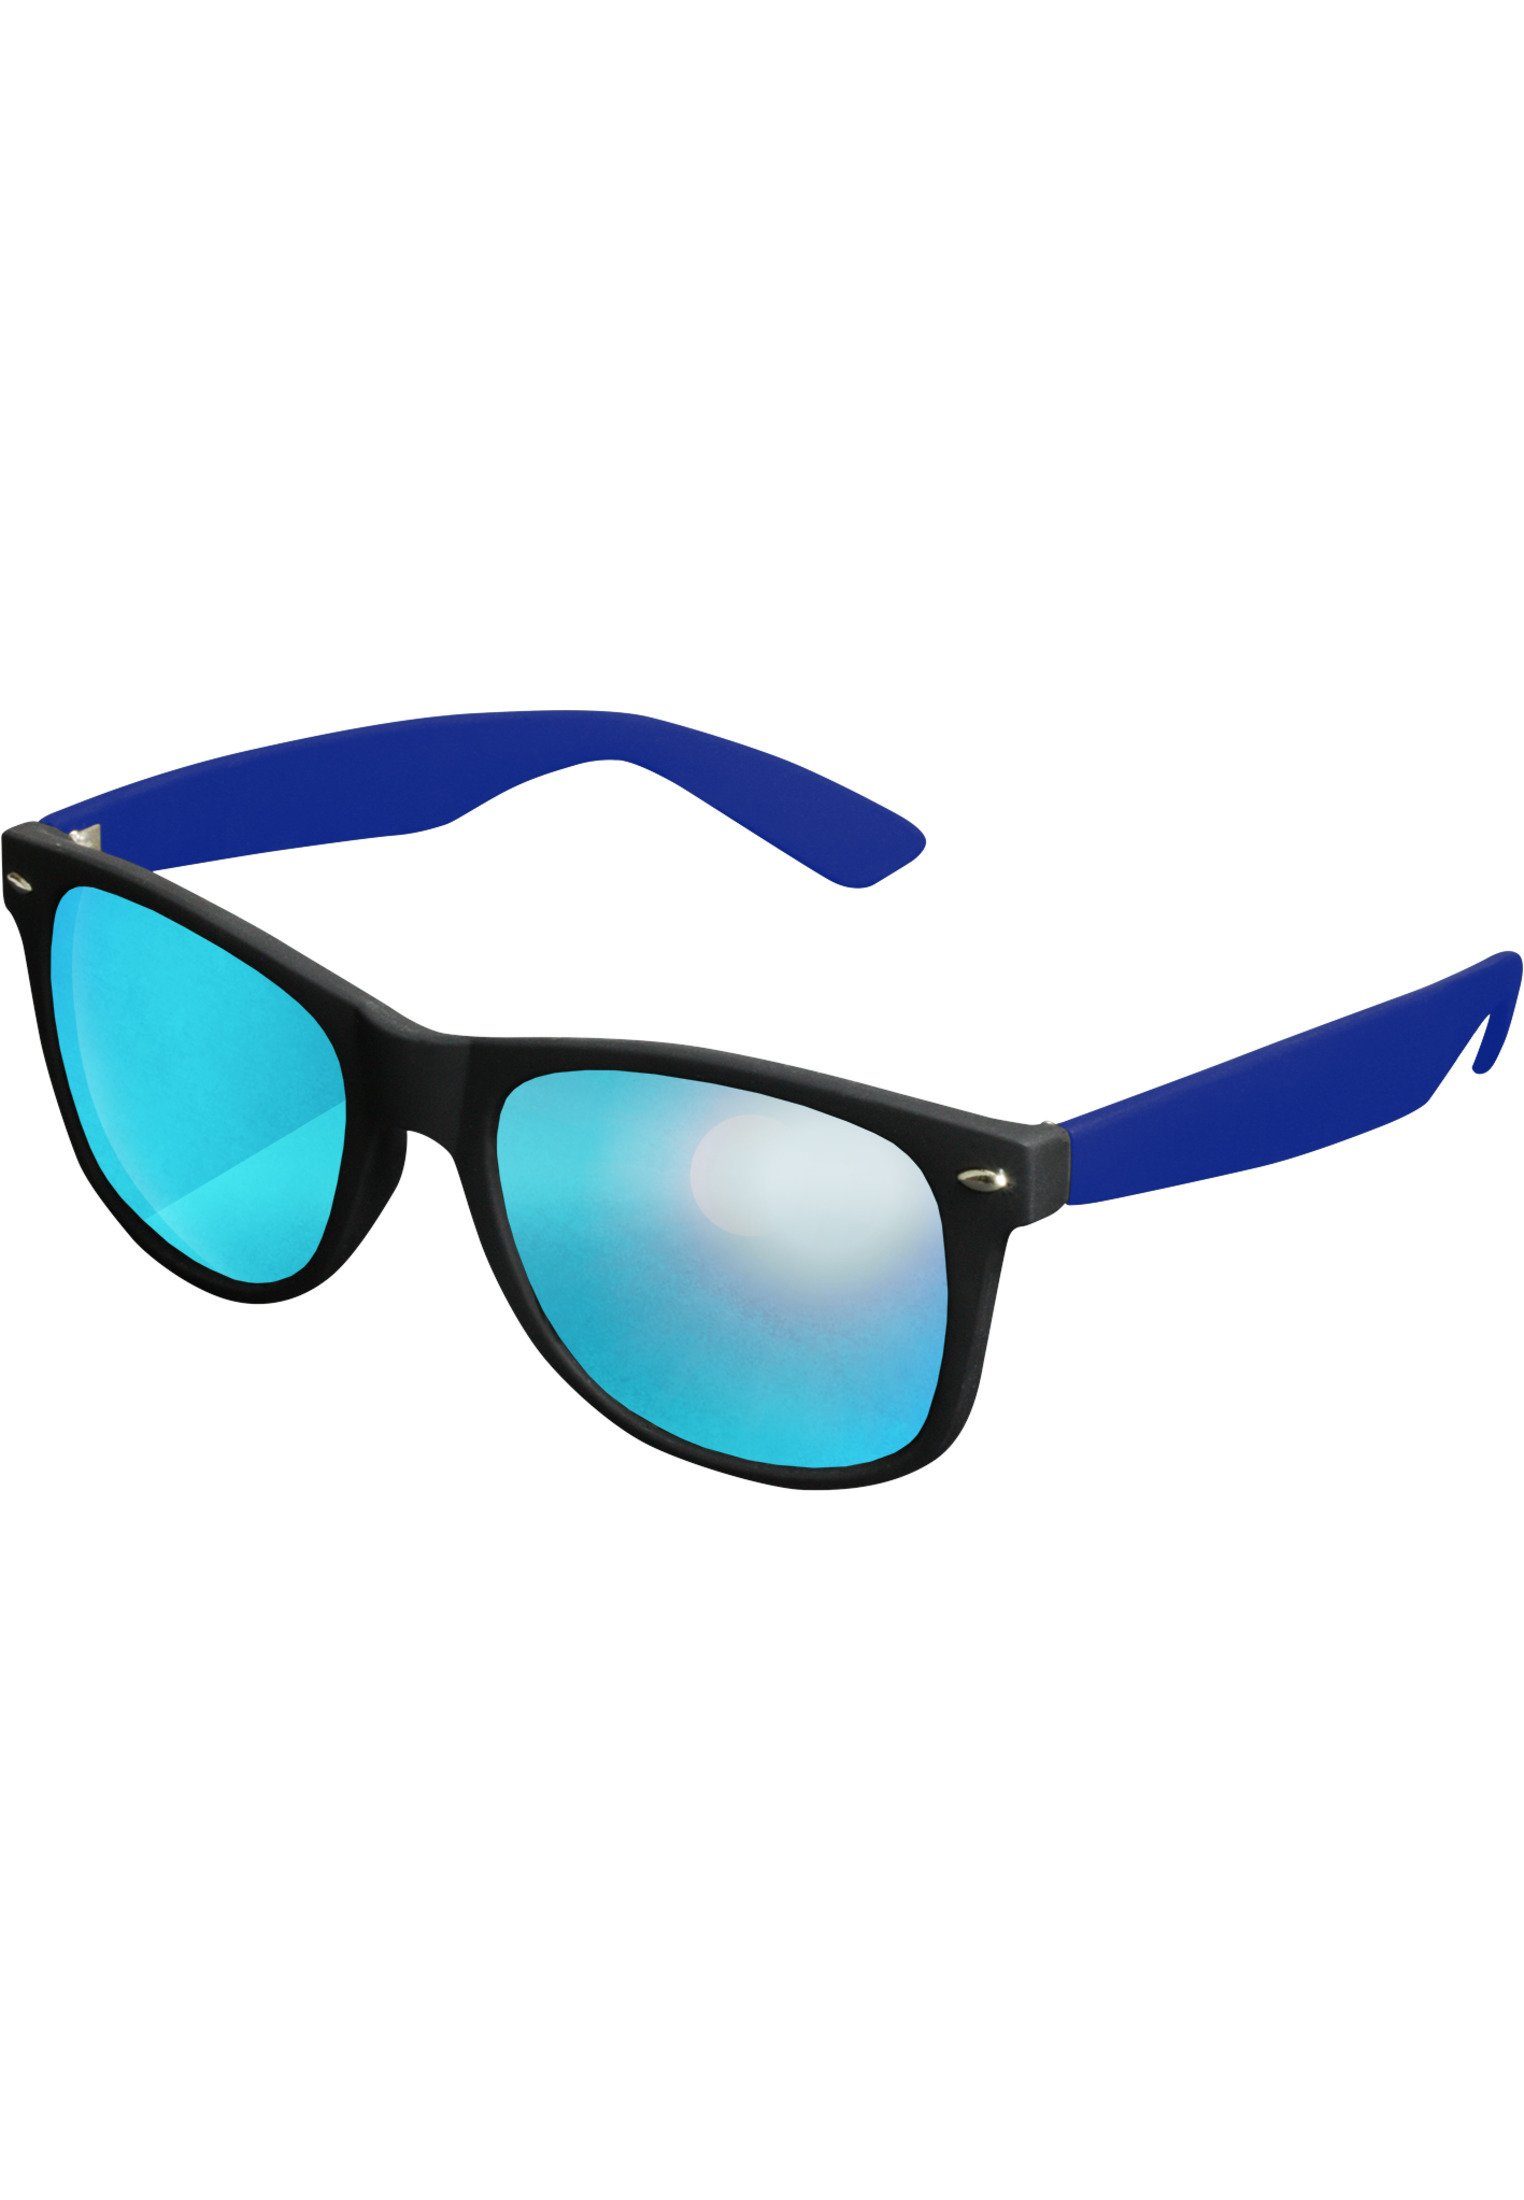 Accessoires Sonnenbrille MSTRDS Mirror Likoma blk/royal/blue Sunglasses